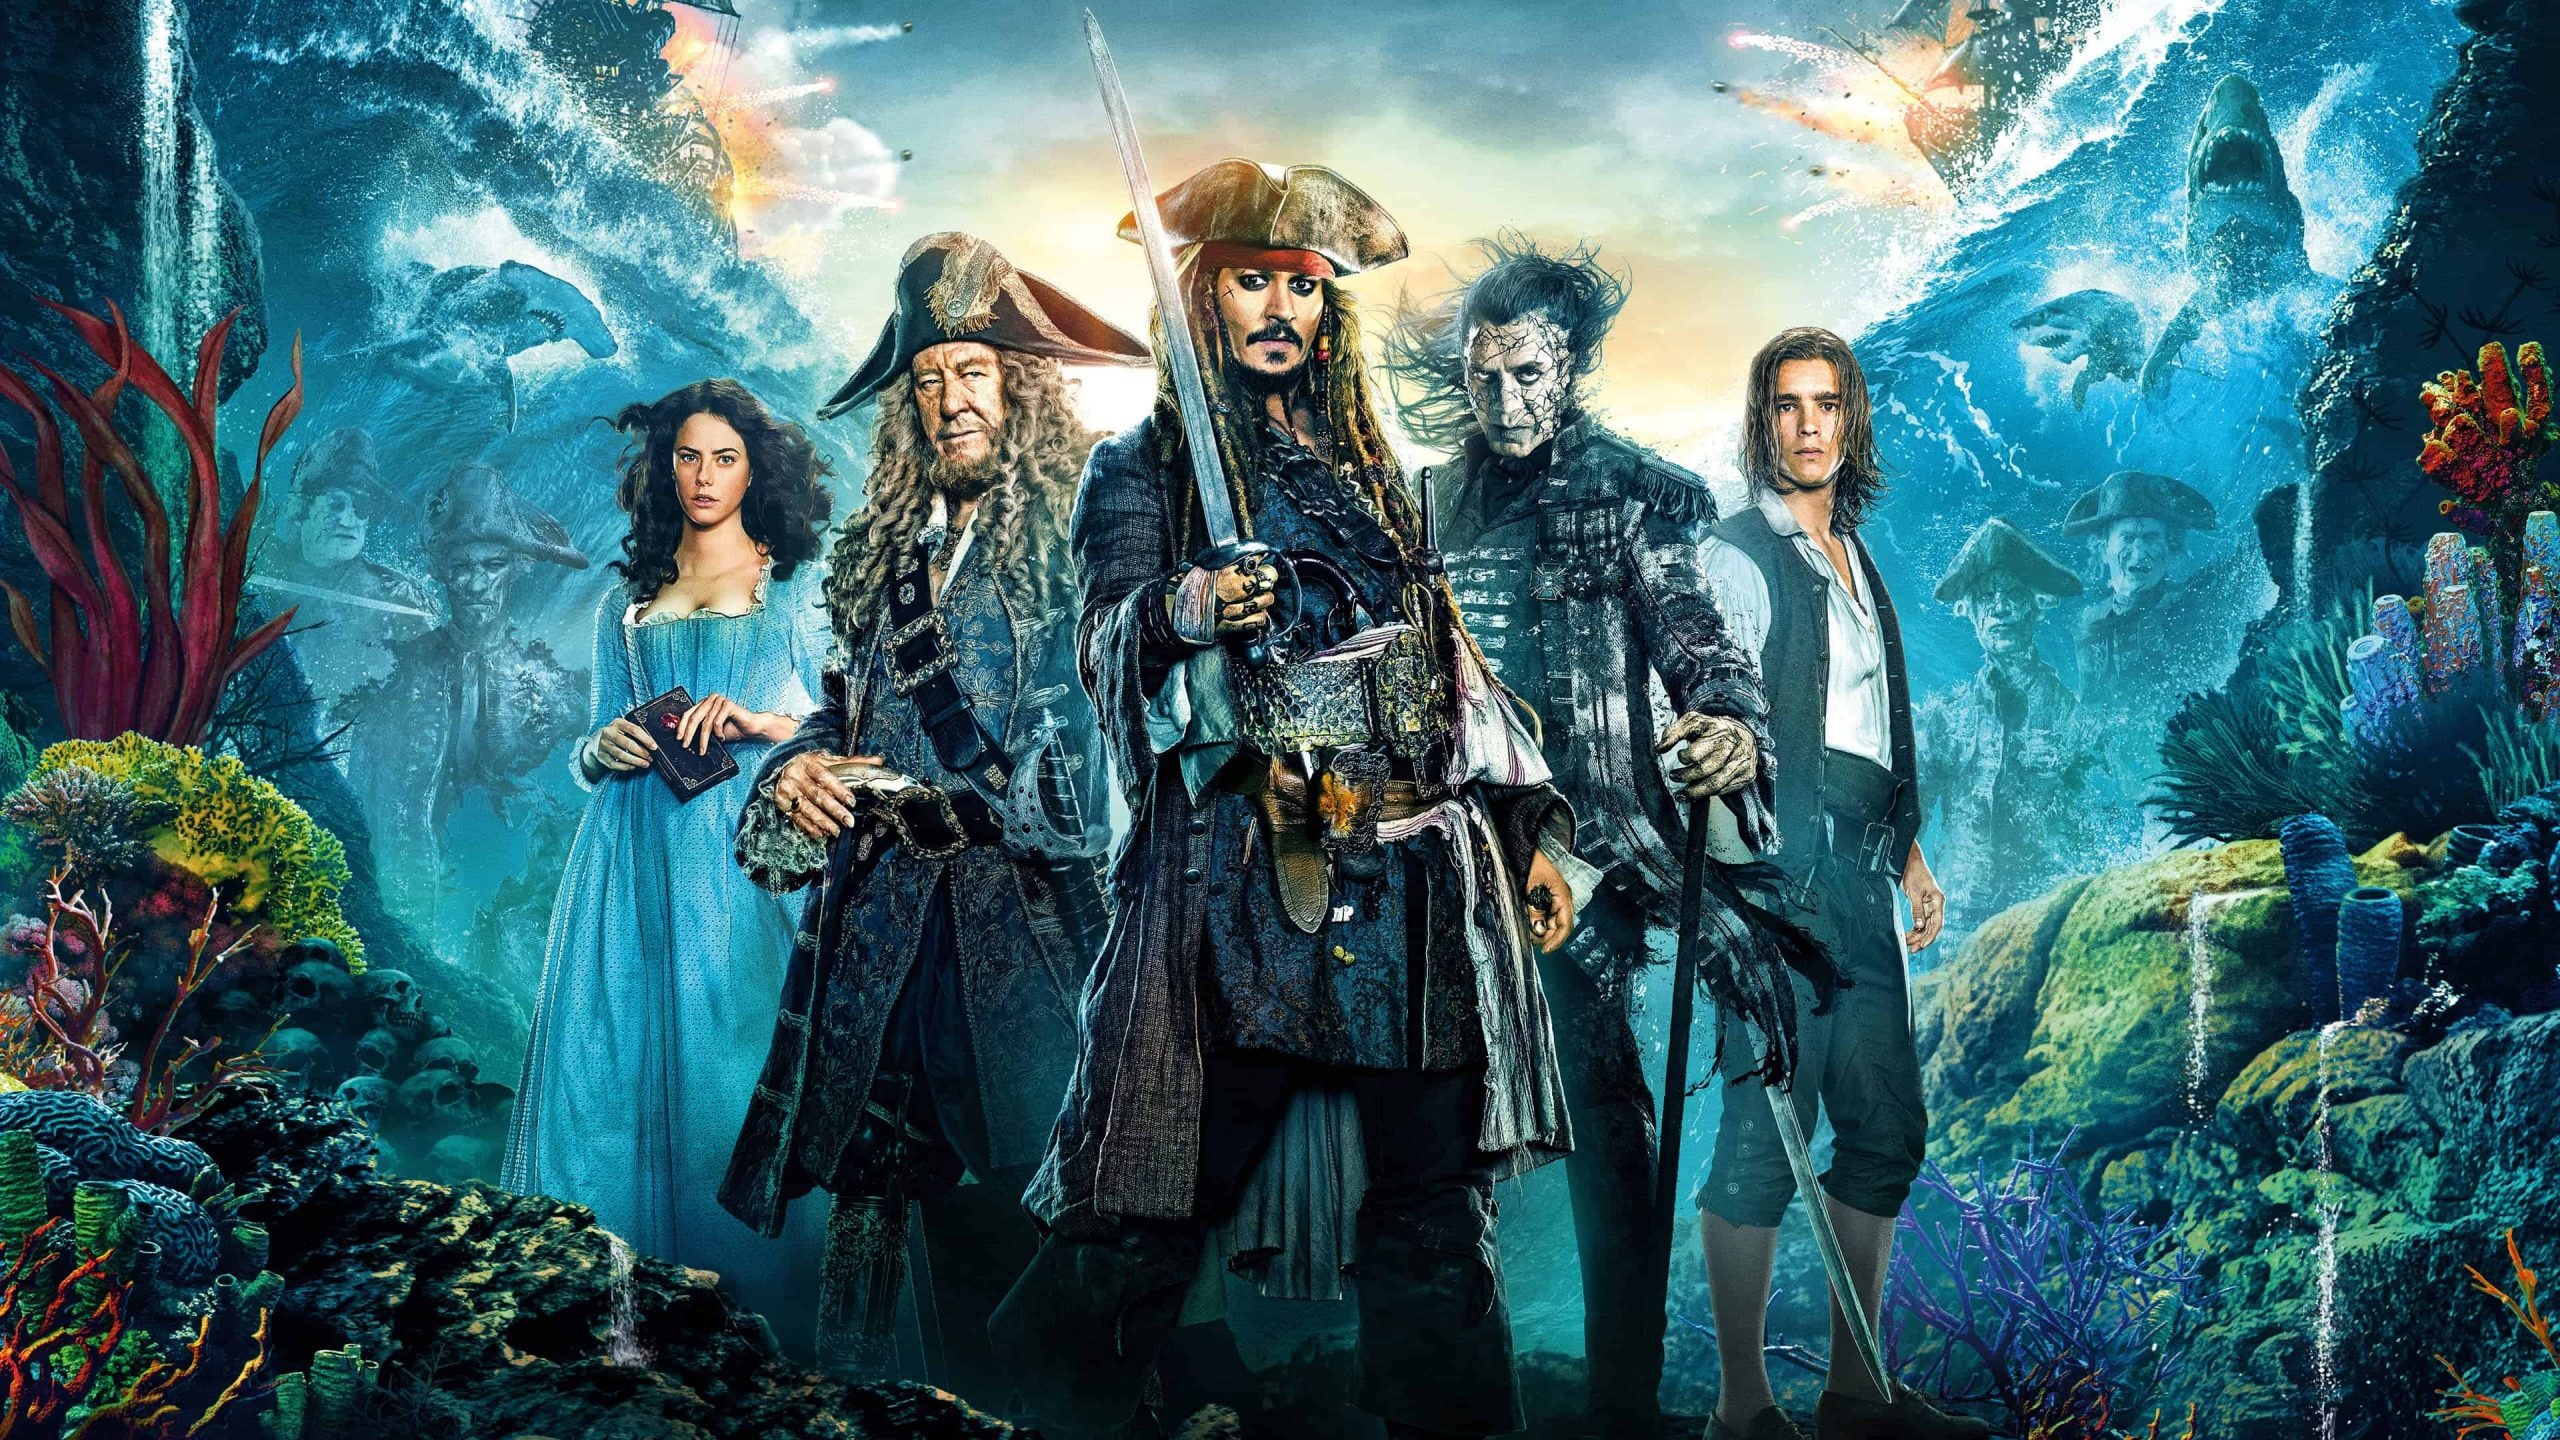 Captain Salazar, Pirates of the Caribbean 5, Streaming options, Adventure film, 2560x1440 HD Desktop